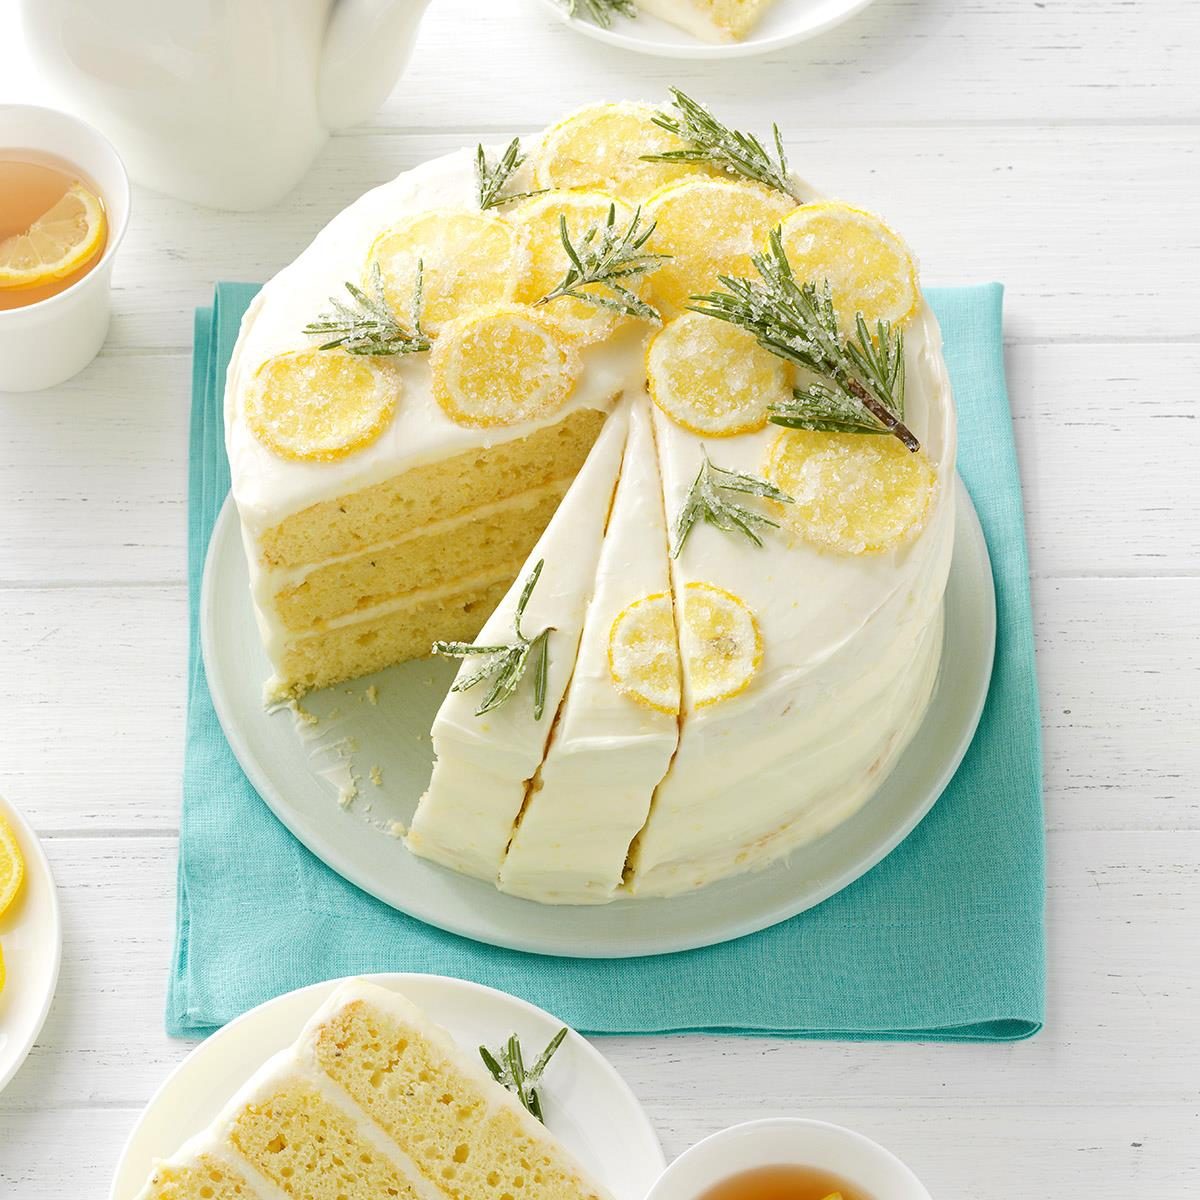 Lemon-Rosemary夹心蛋糕